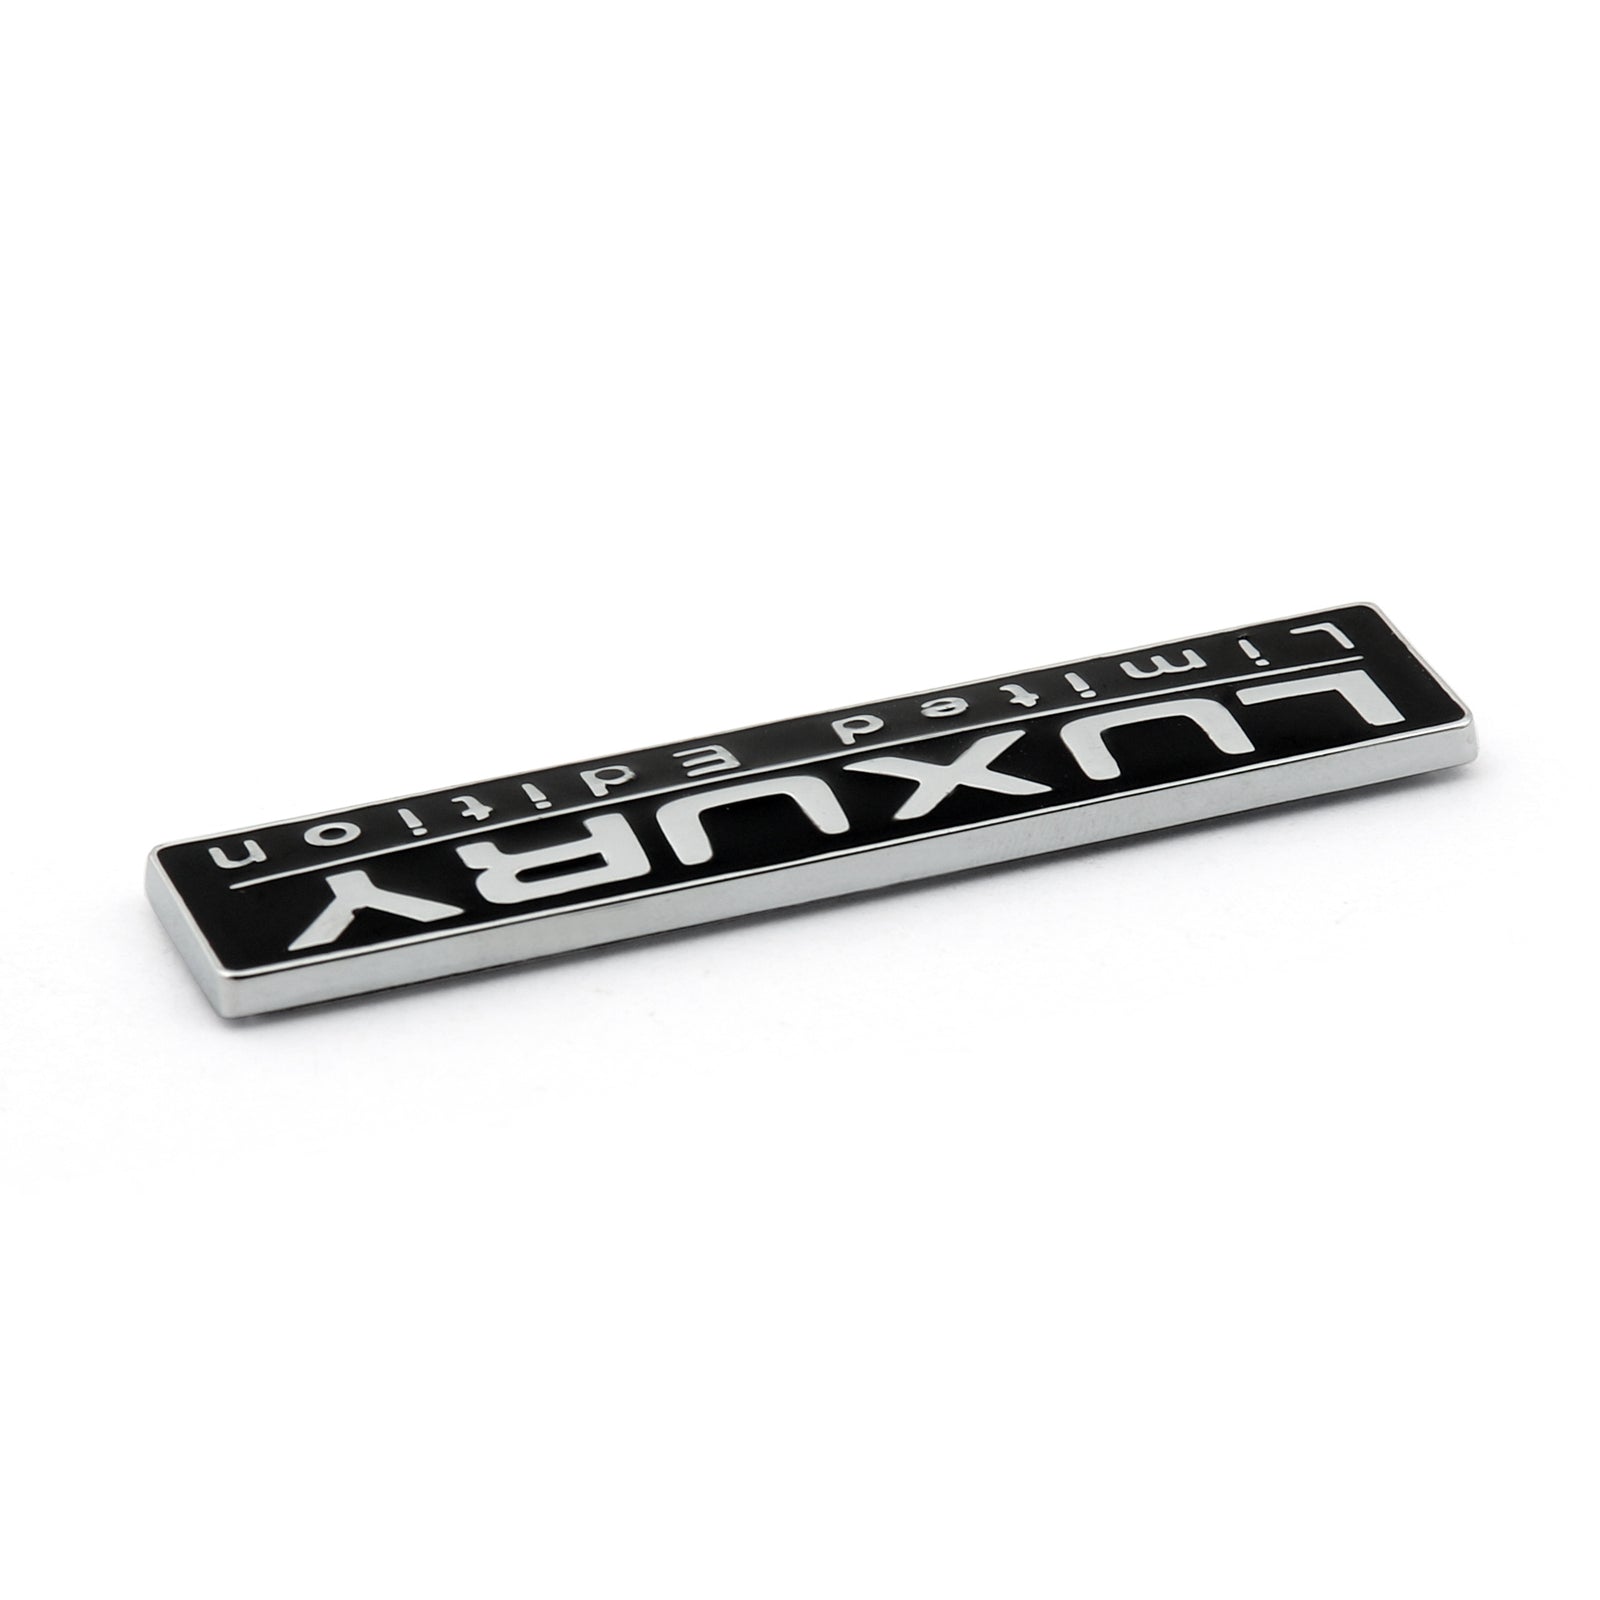 Auto 3D Aluminium LUXURY LIMITED EDITION Emblem Decal Badge Sticker